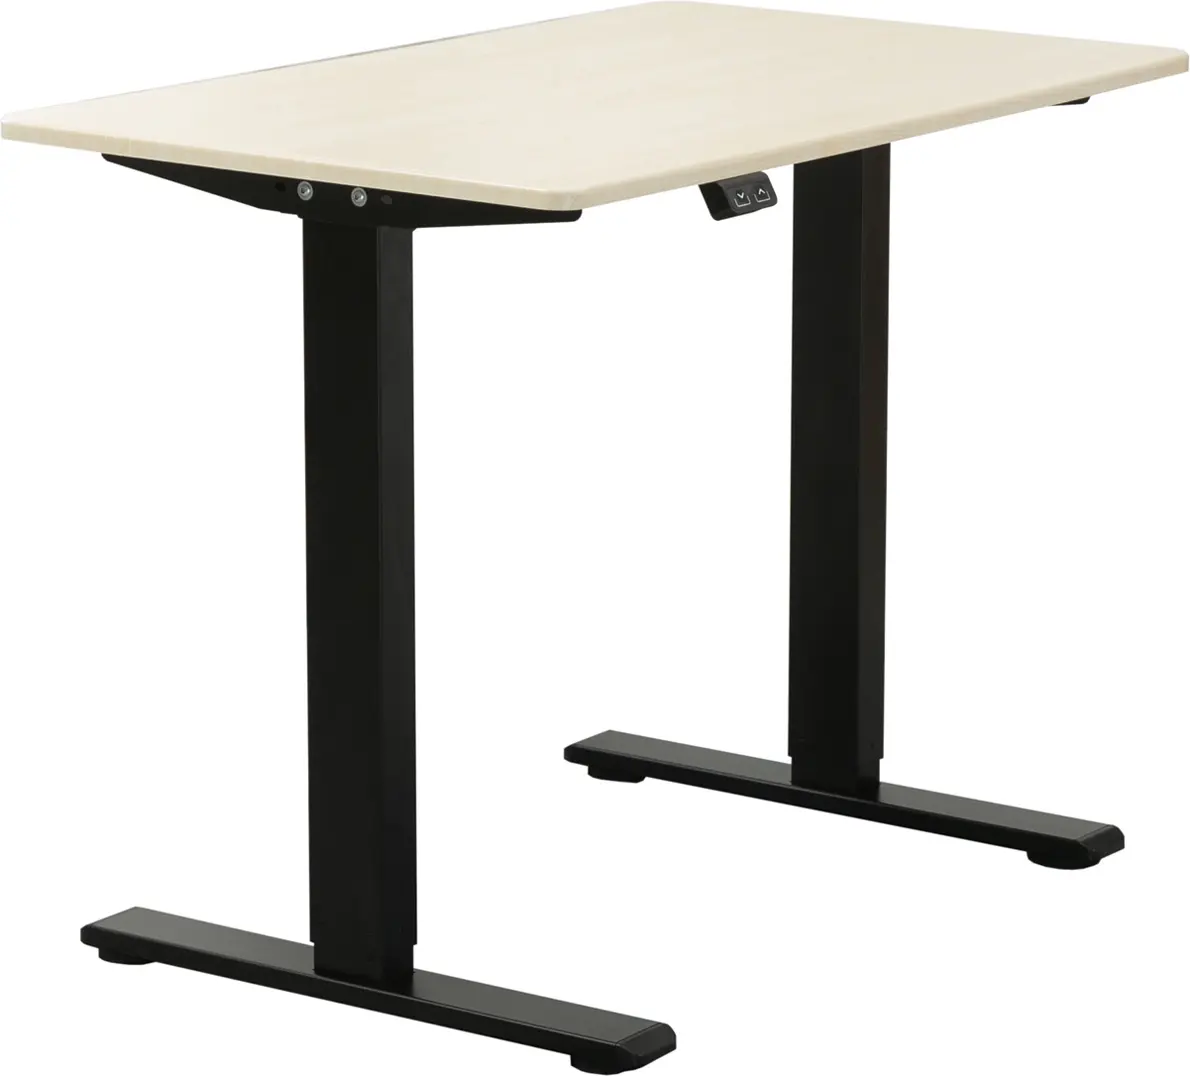 Including Table Board Standing Office Computer Desk Student Study Desk Desk Riser Stand